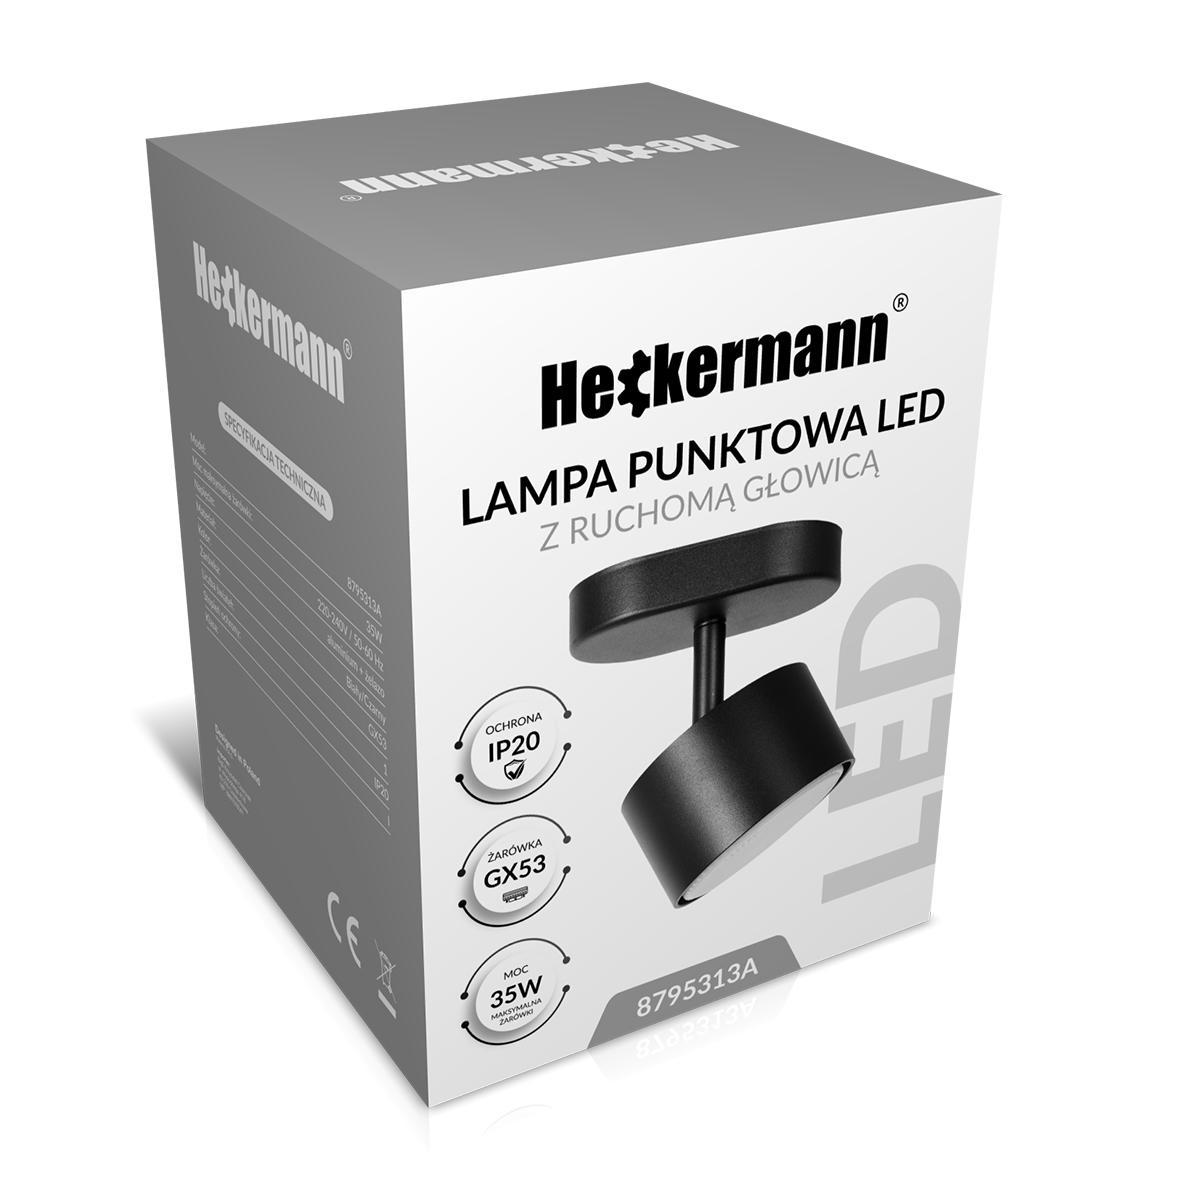 Lampa sufitowa punktowa LED Heckermann 8795313A Czarna 1x głowica + 1x Żarówka LED GX53 7W Neutral 6 Full Screen